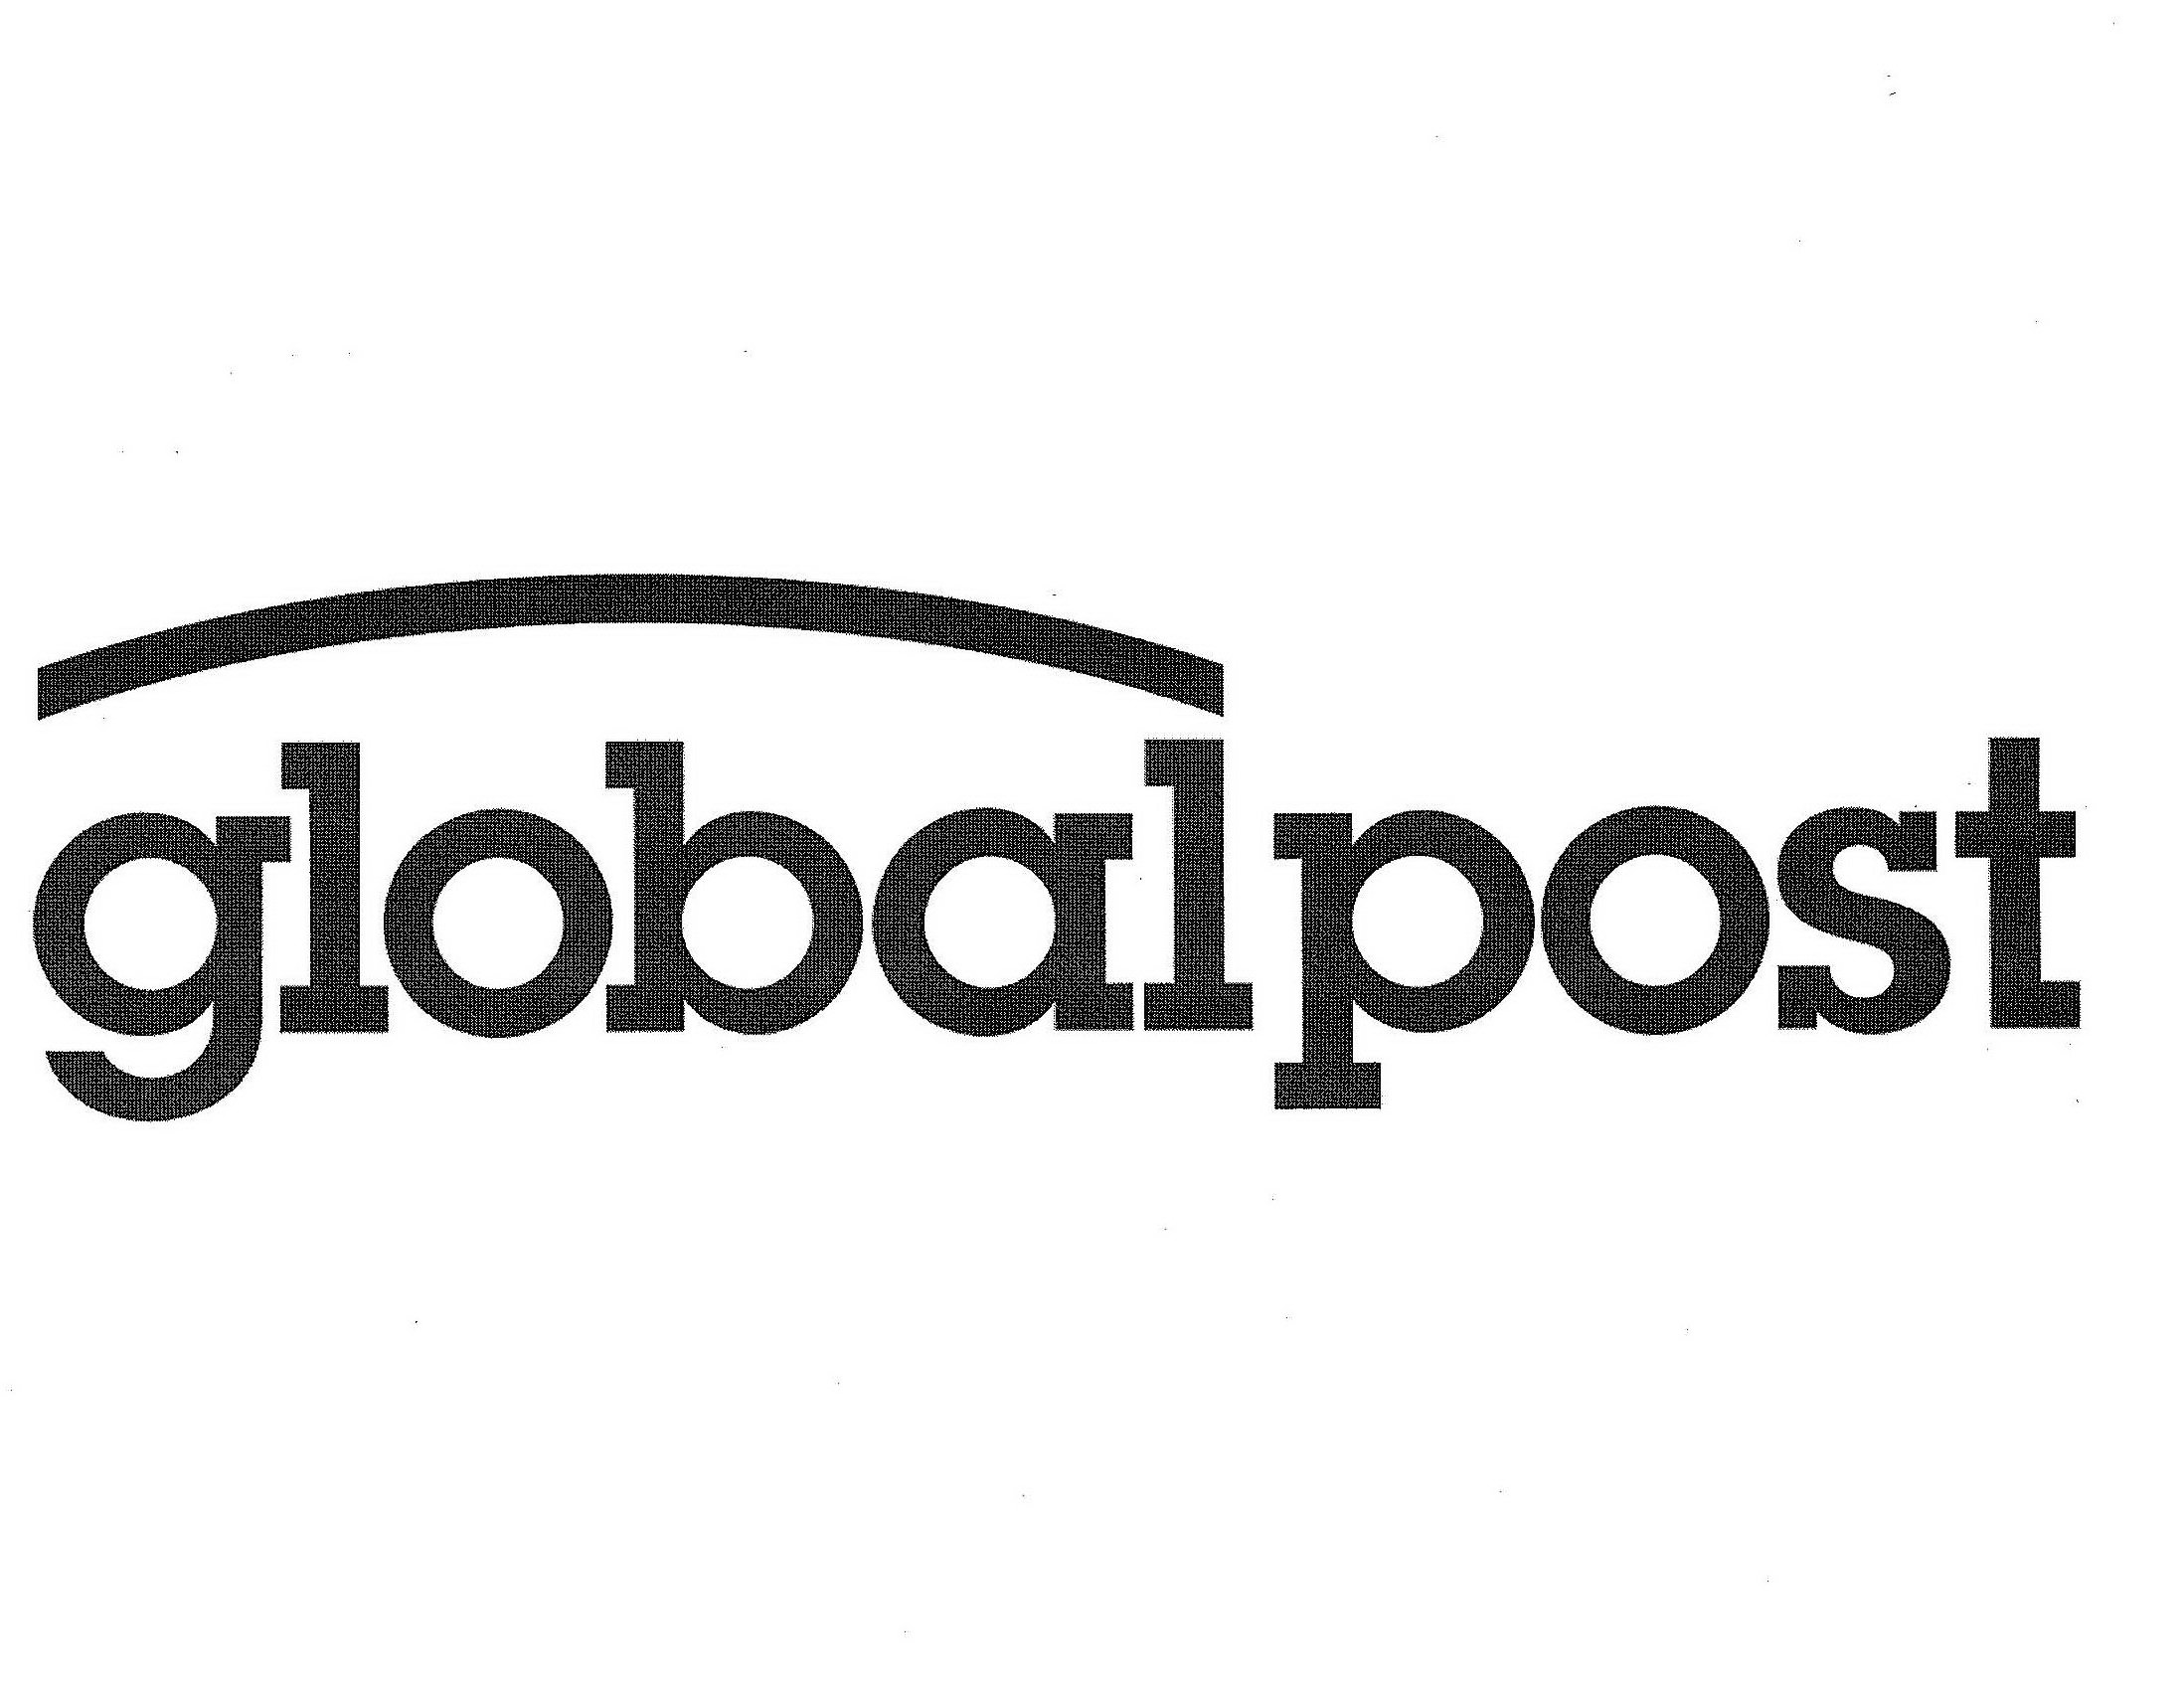 Trademark Logo GLOBALPOST